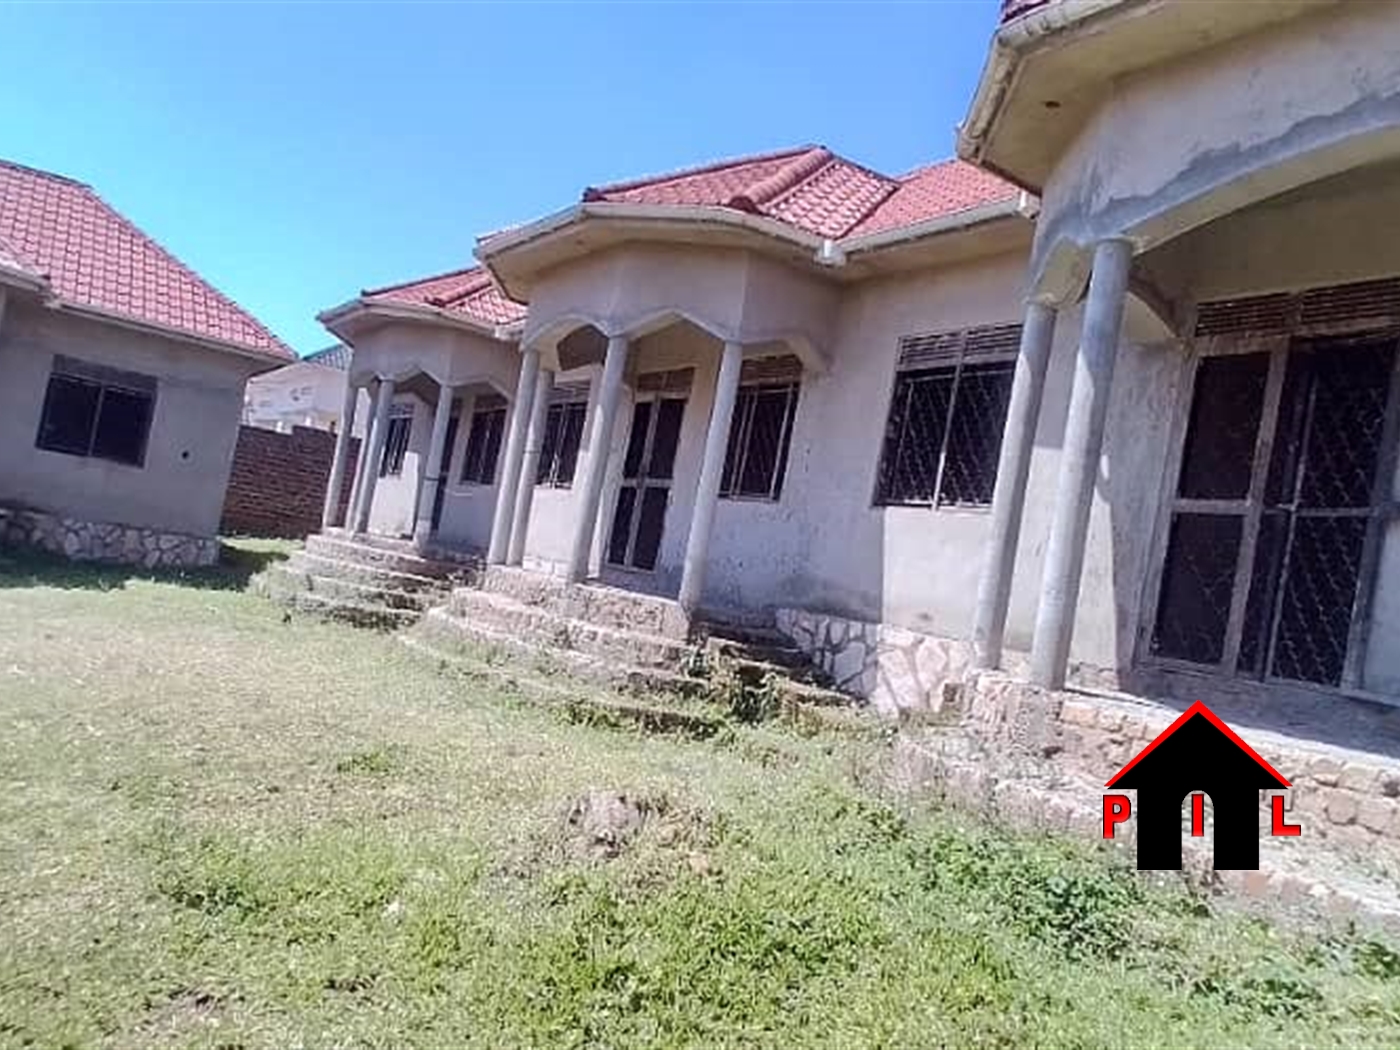 Rental units for sale in Katosi Mukono